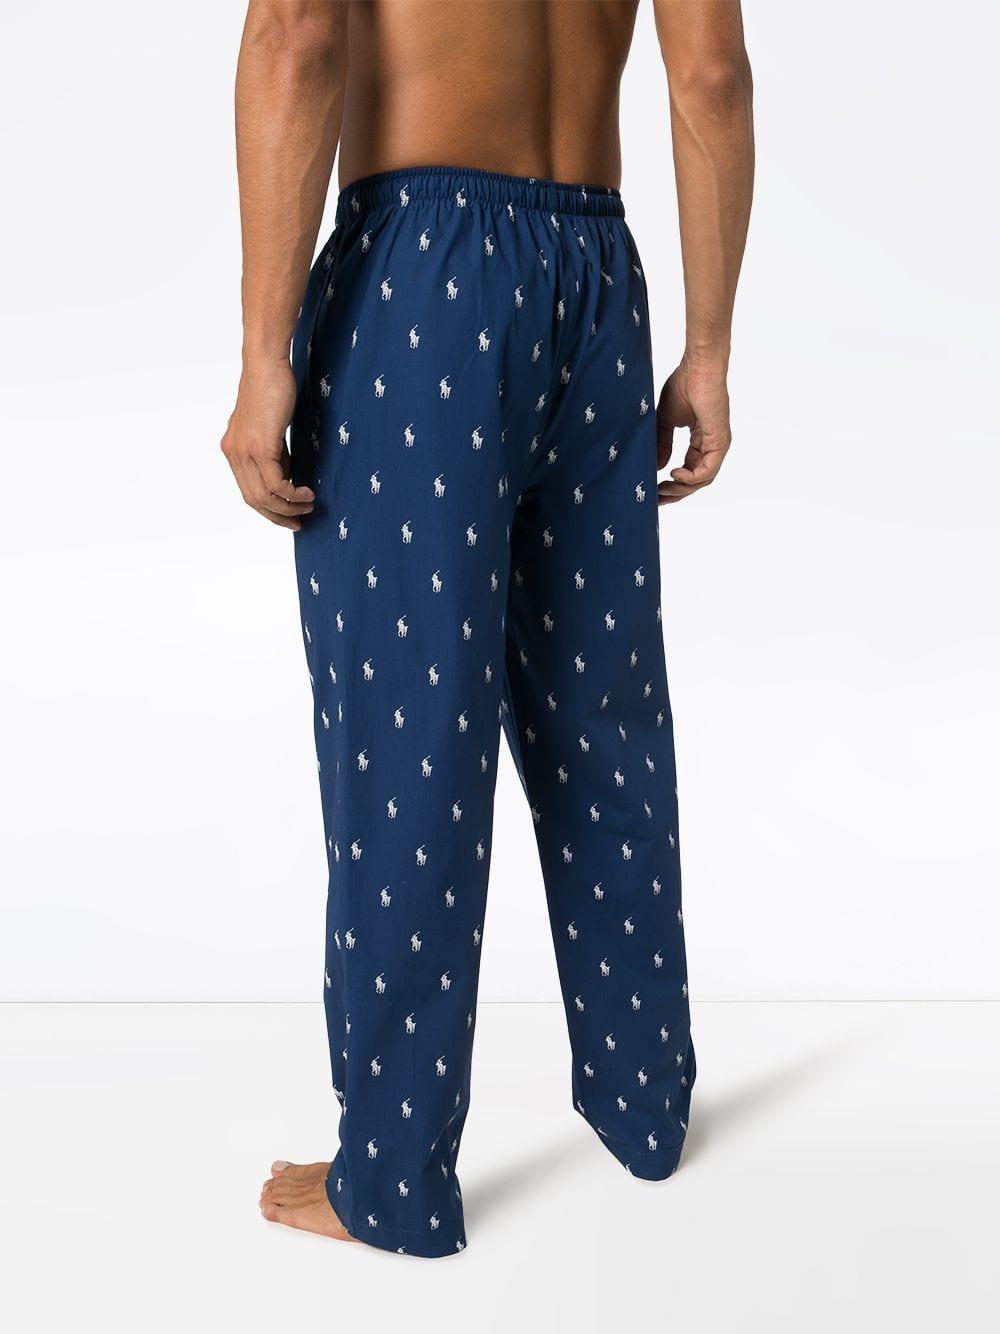 Ralph Lauren Homme Pyjama Denmark, SAVE 56% - mpgc.net